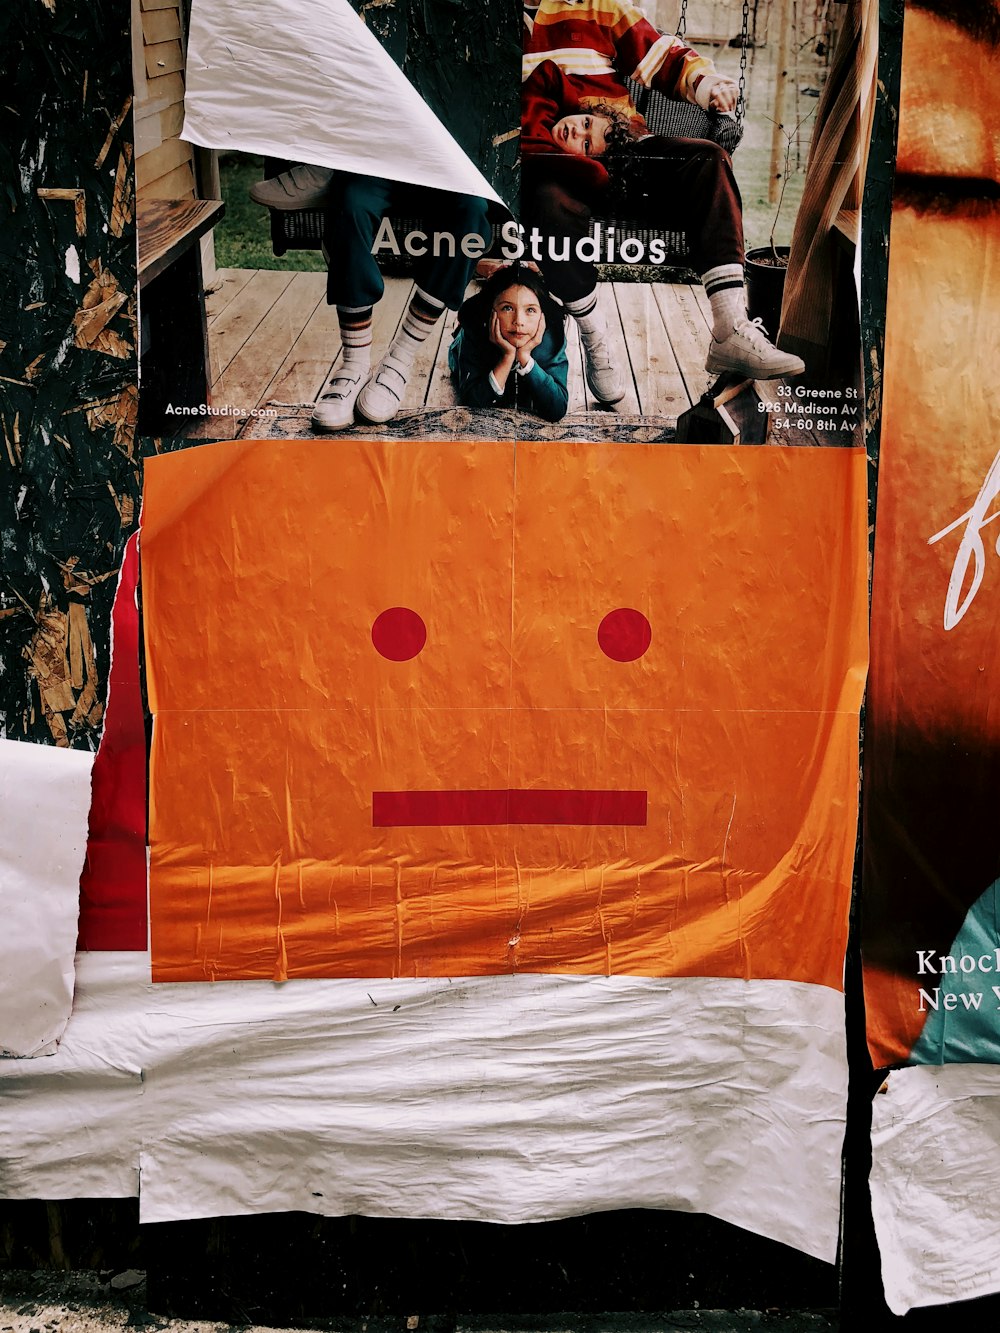 Acne Studios poster